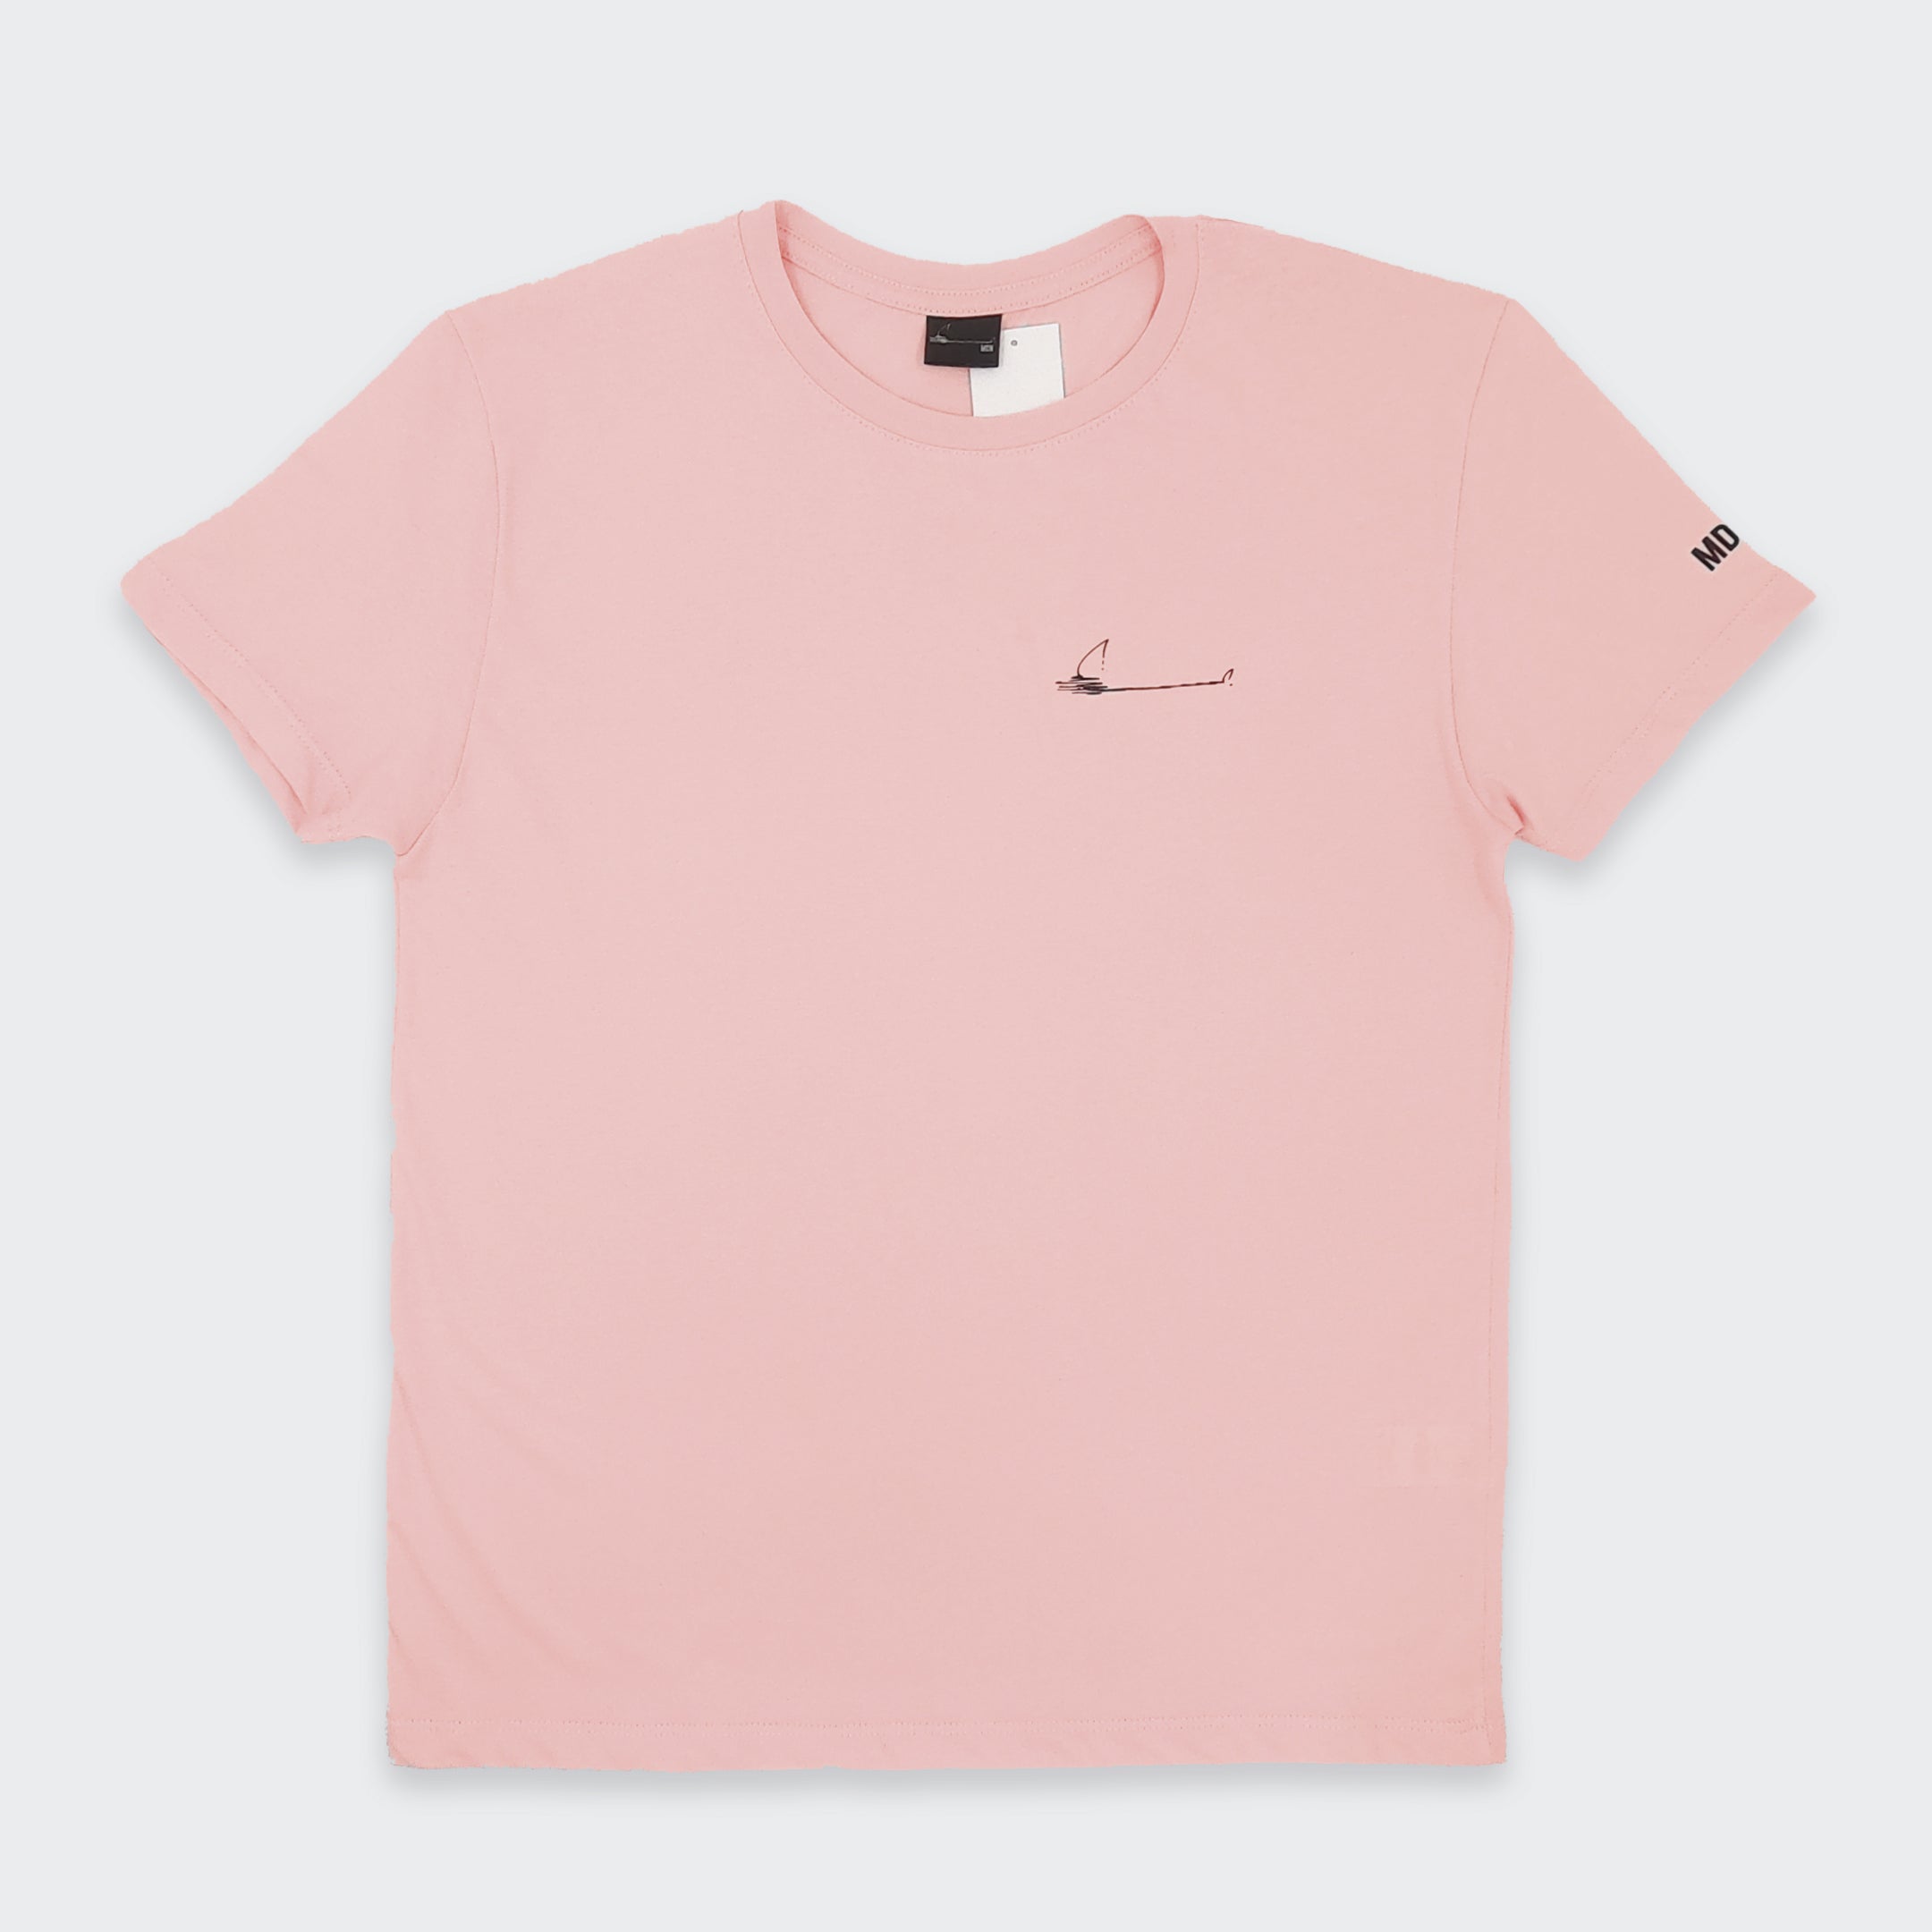 Camiseta Blunt Eye Flower Rosa - Comprar em VIVA VIVAZZ